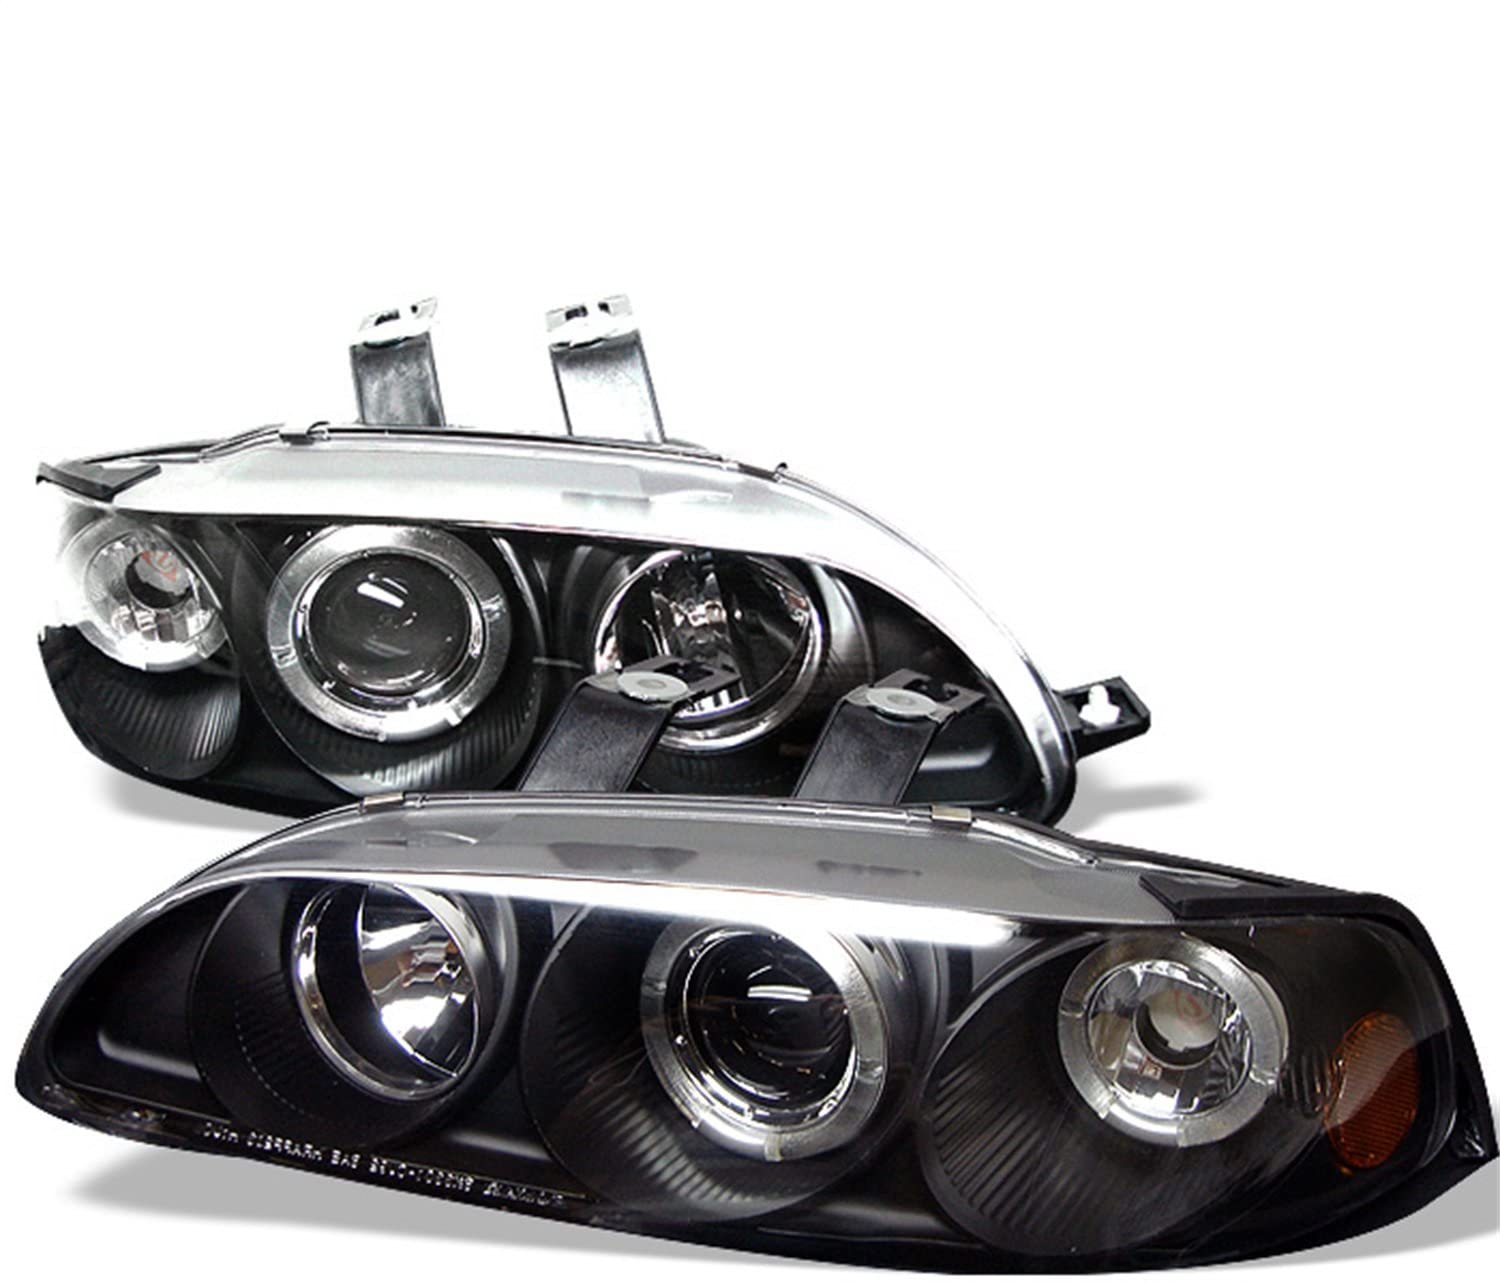 Spyder Auto 5010872 Halo Projector Headlights Fits 92-95 Civic